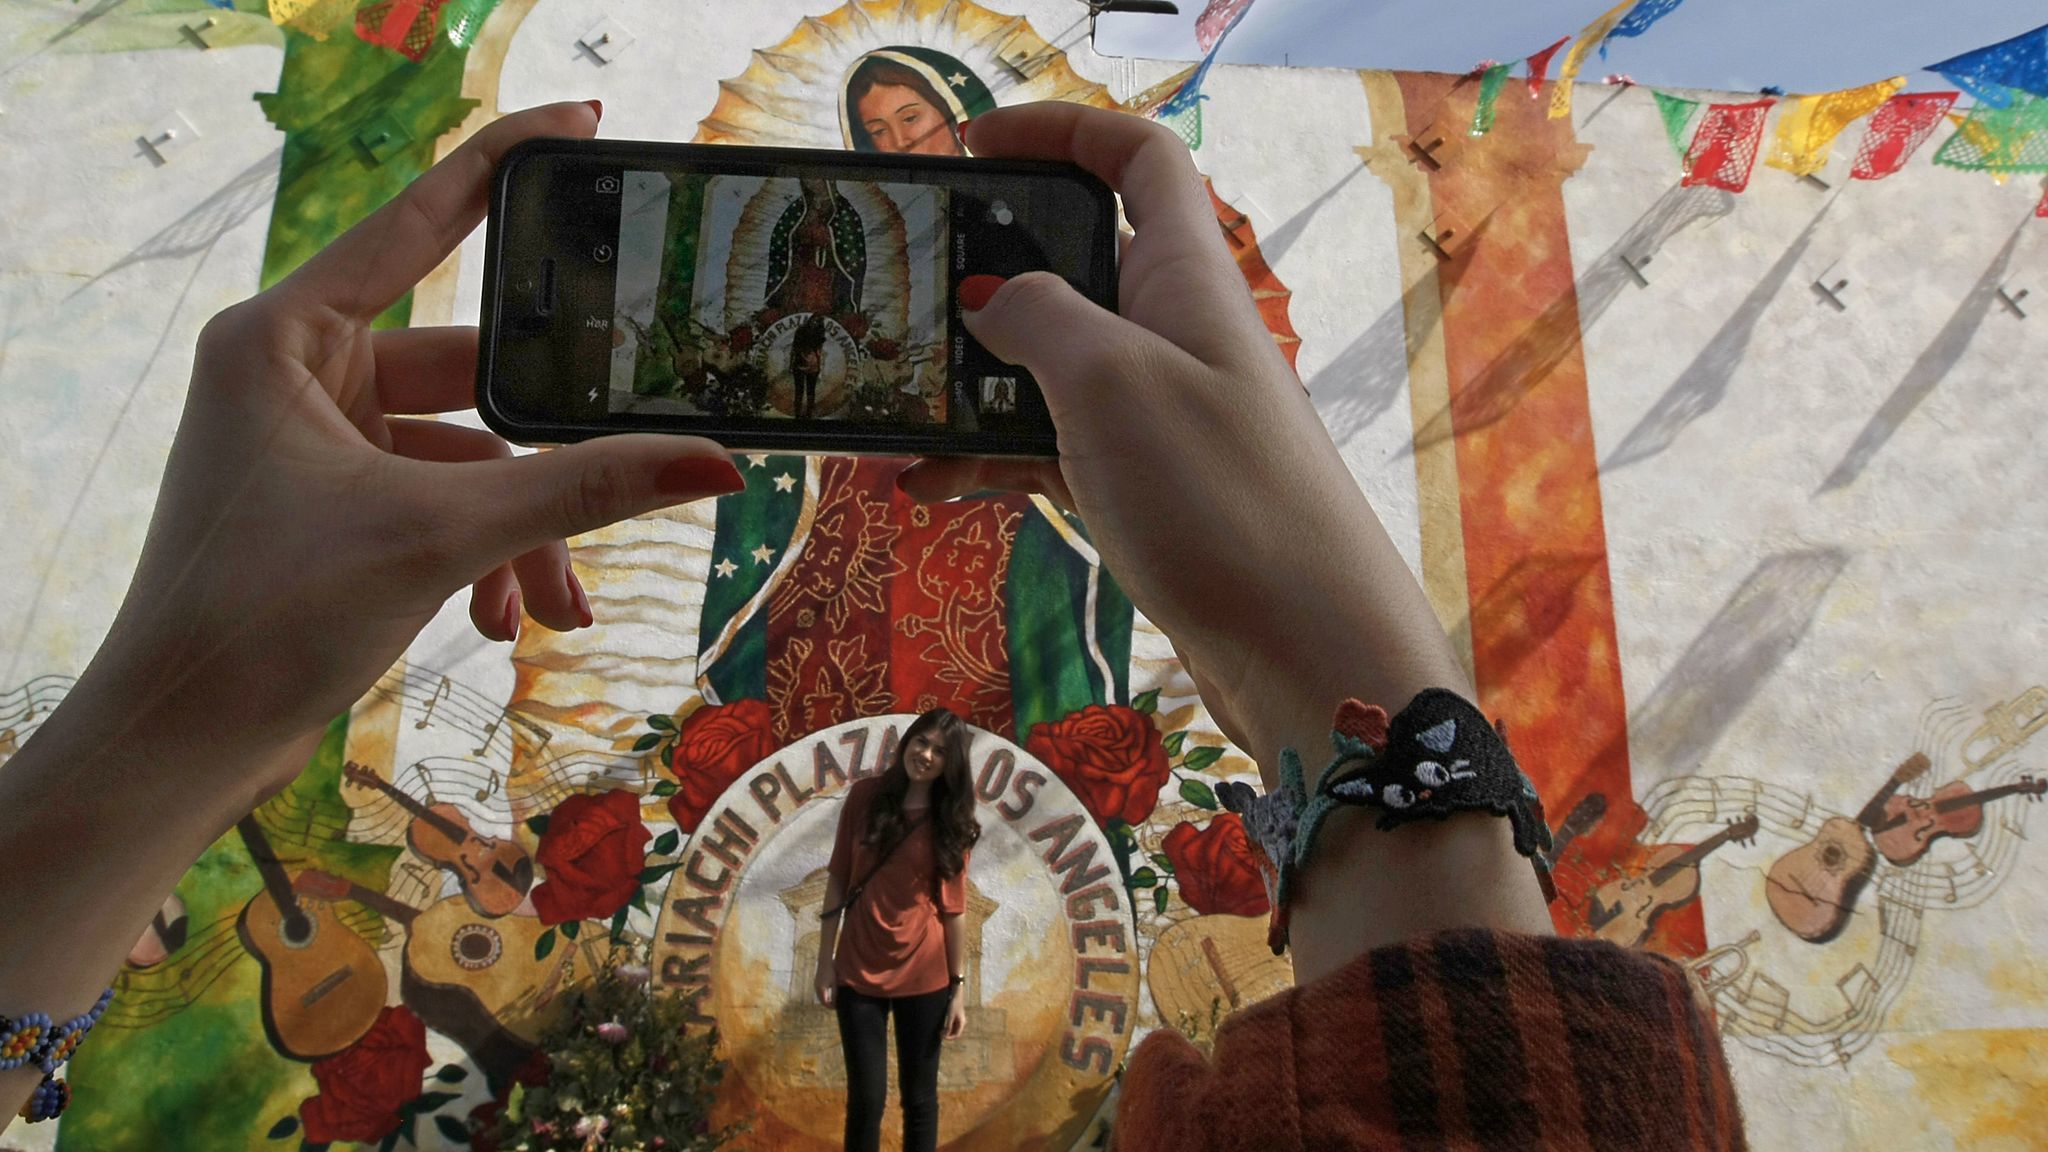 Jessica Alvarez takes a photo of Briana Alvarez on a visit to Mariachi Plaza in Boyle Heights.